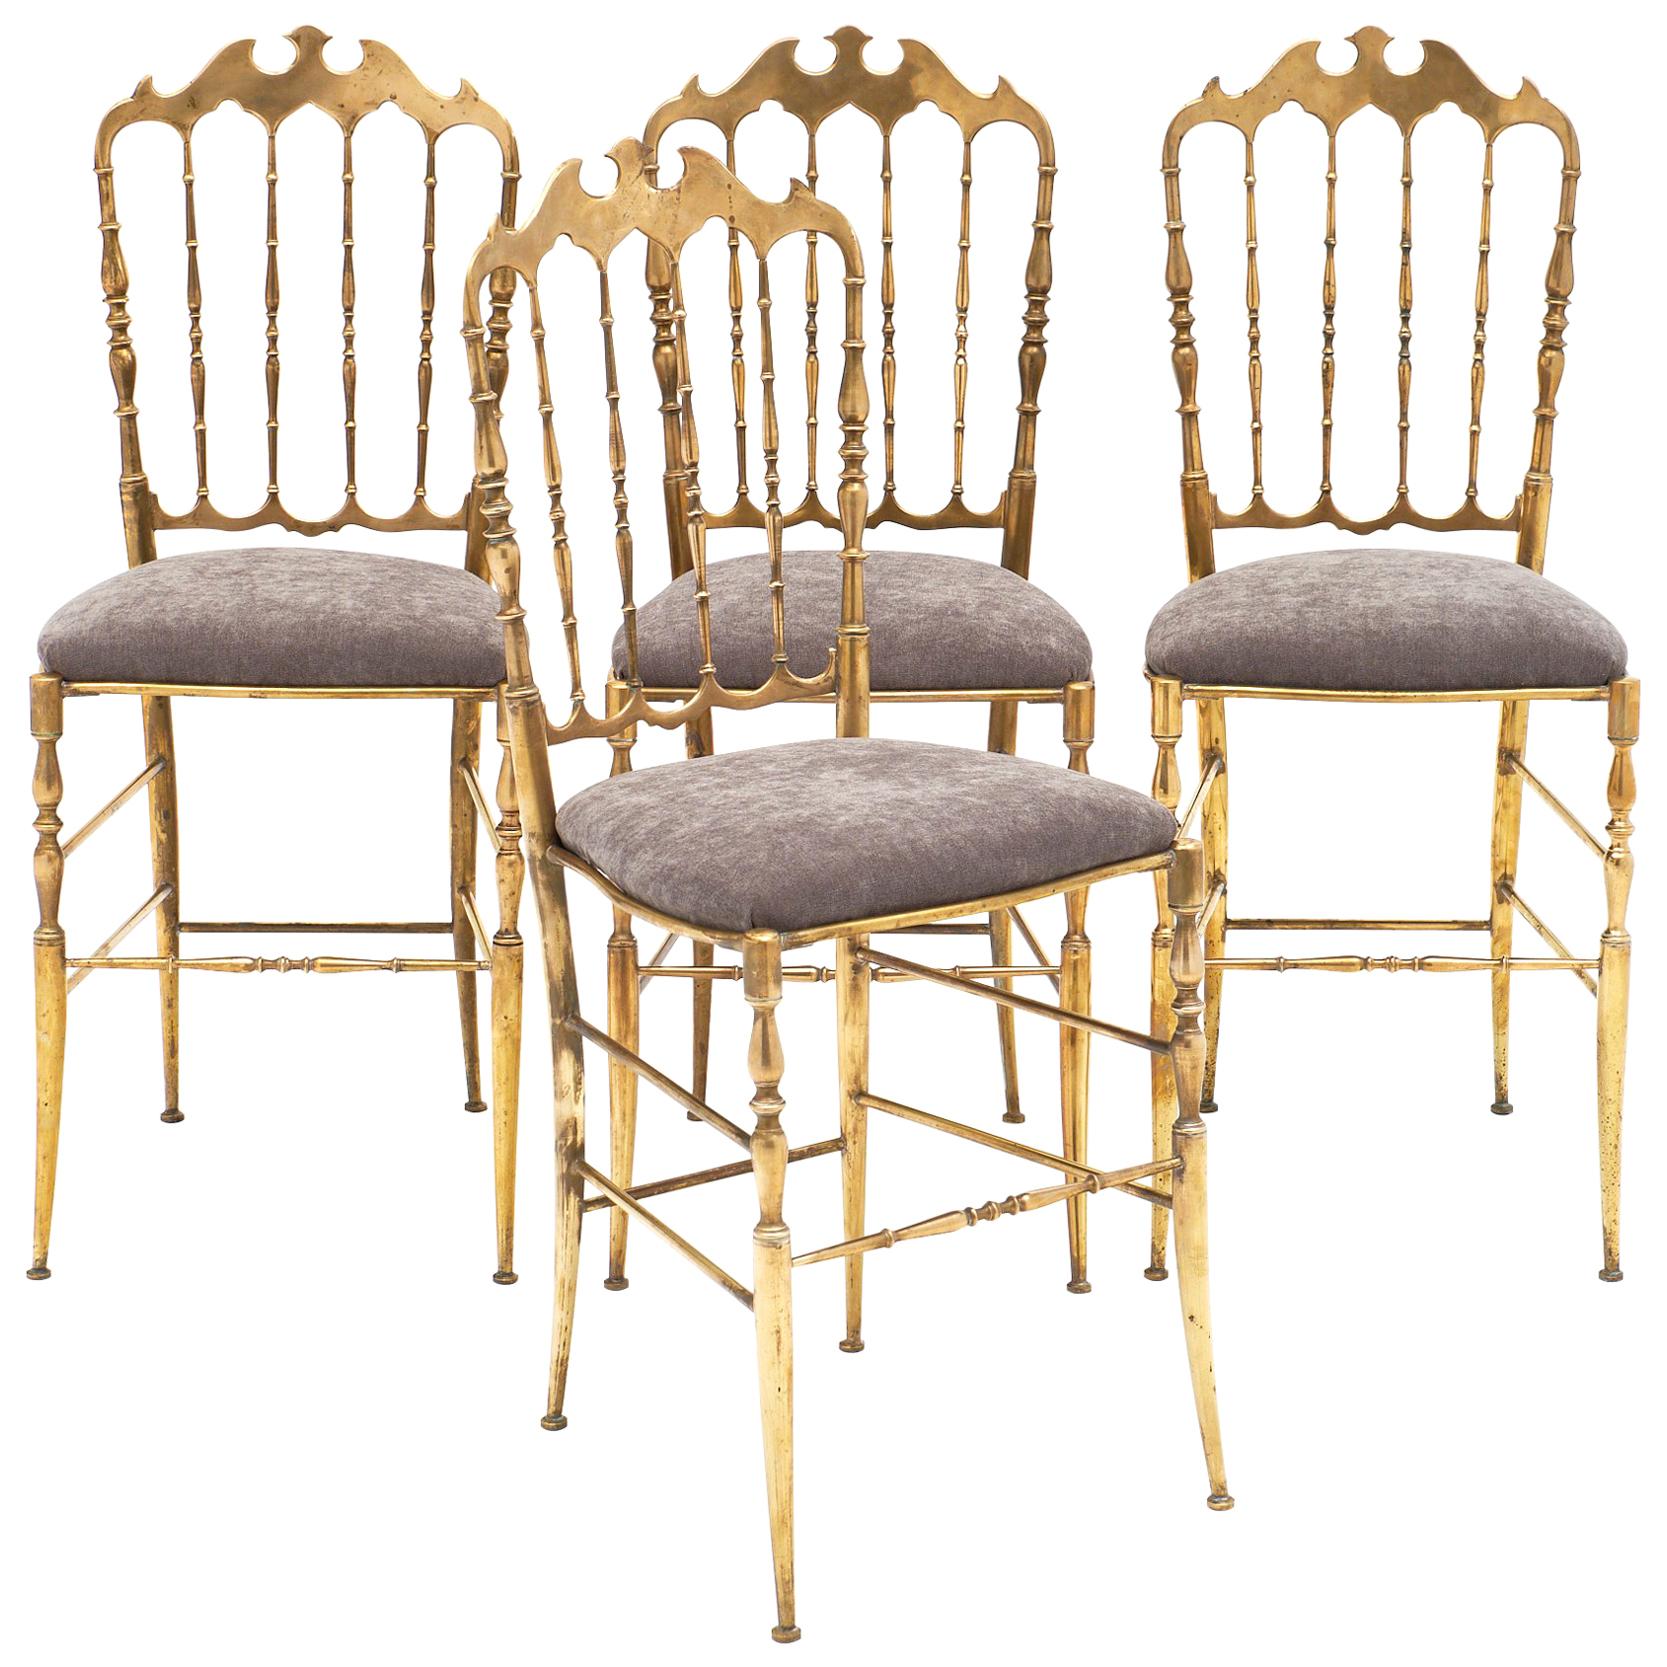 Four Vintage Chiavari Chairs